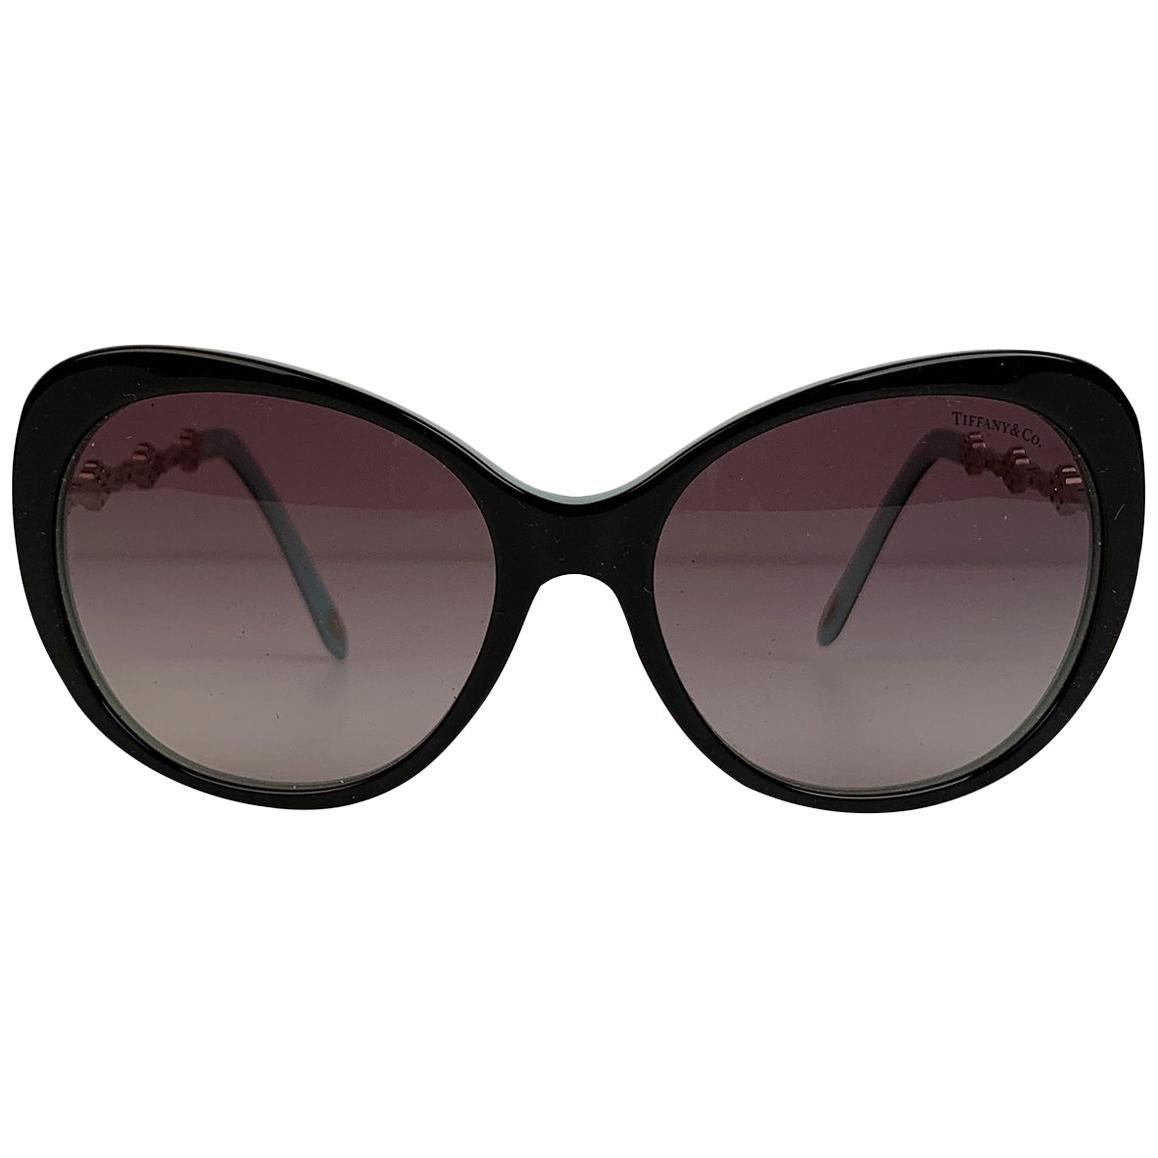 Tiffany & Co. Black TF 4053 B Sunglasses 56/17 135 mm with Crystals